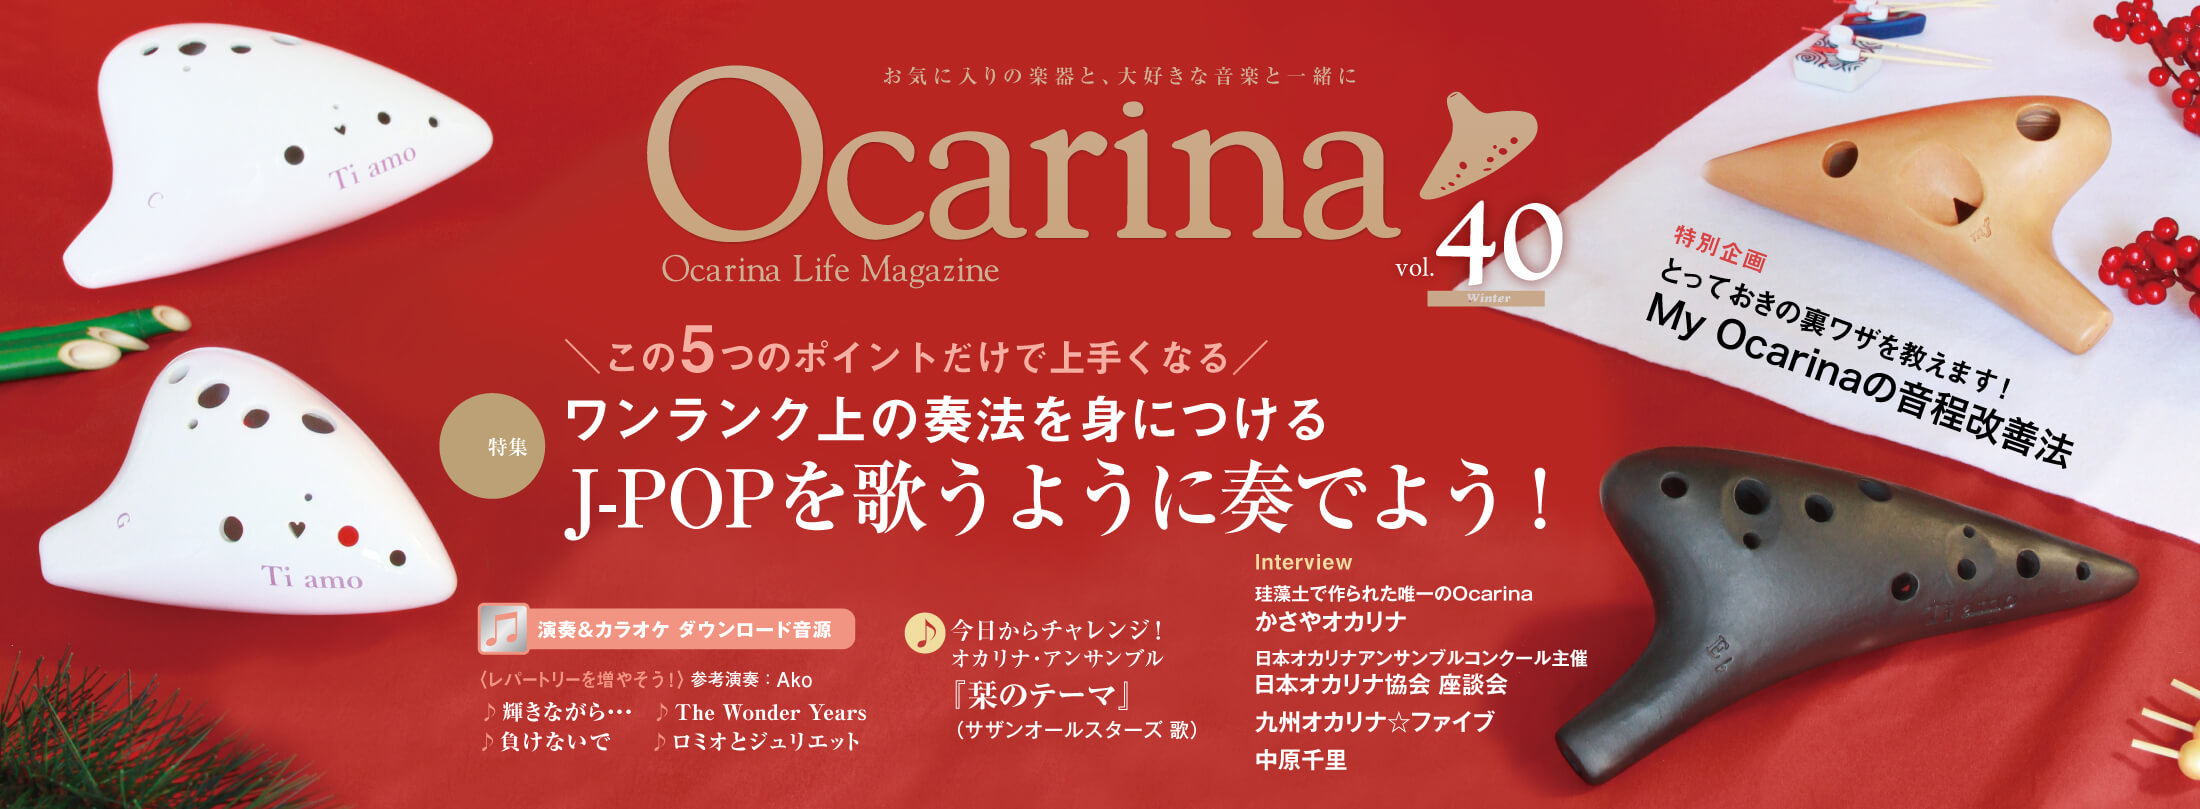 Ocarina 40号